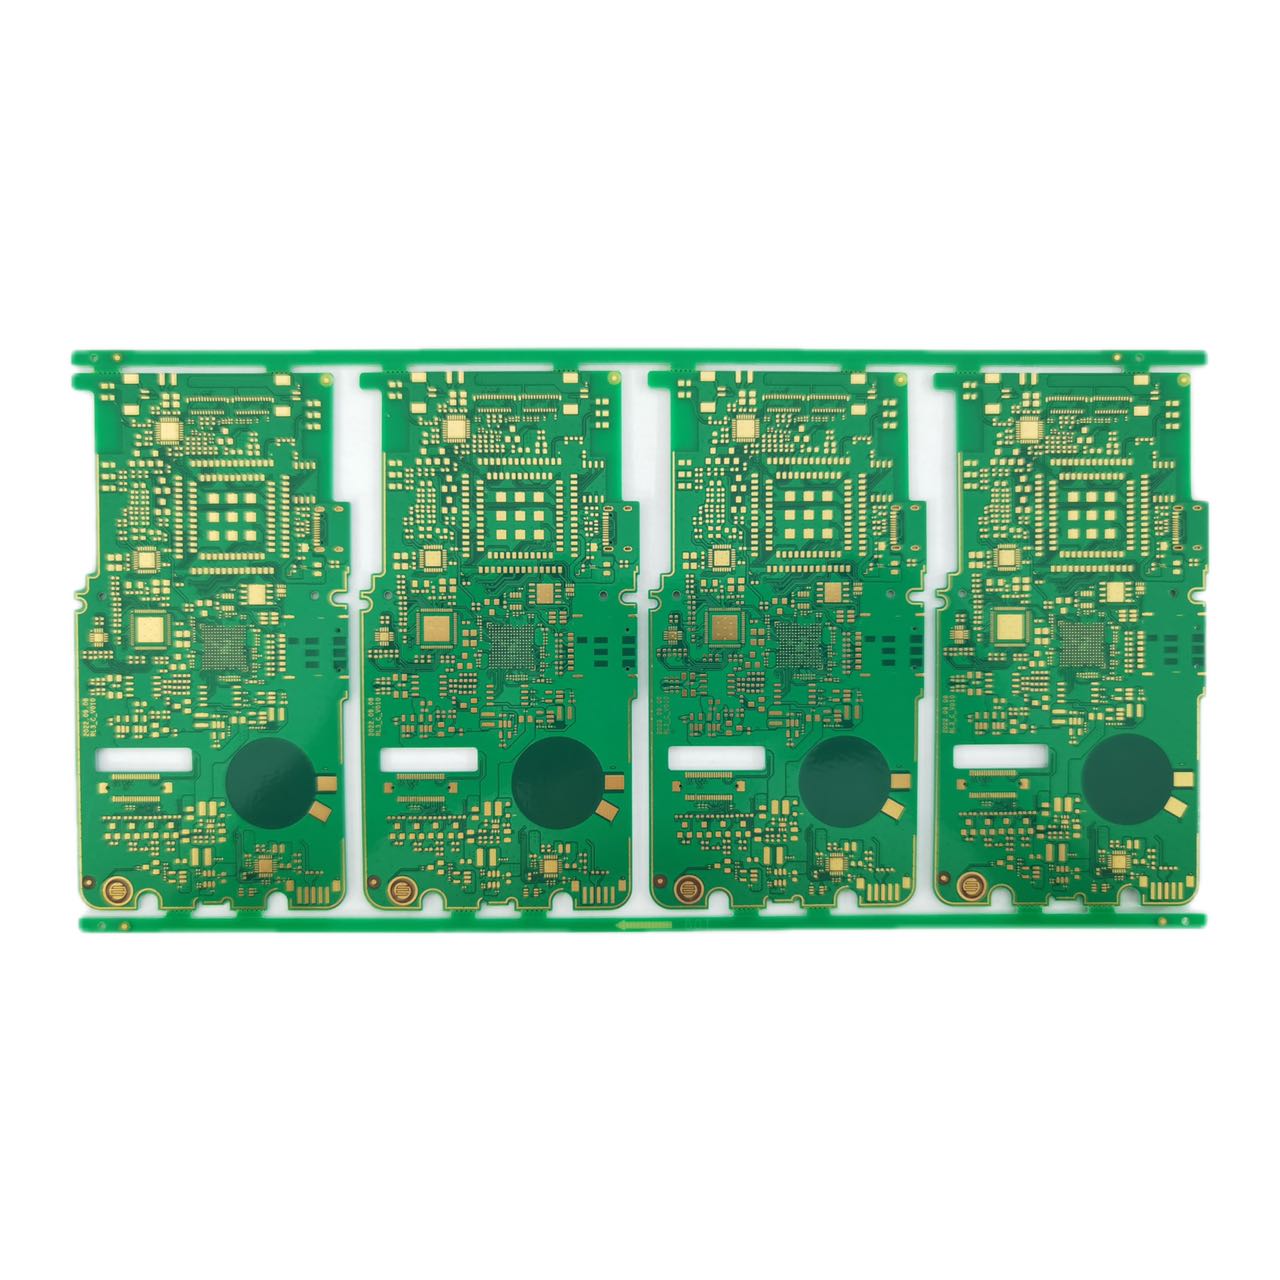 High density multi-layer PCB board